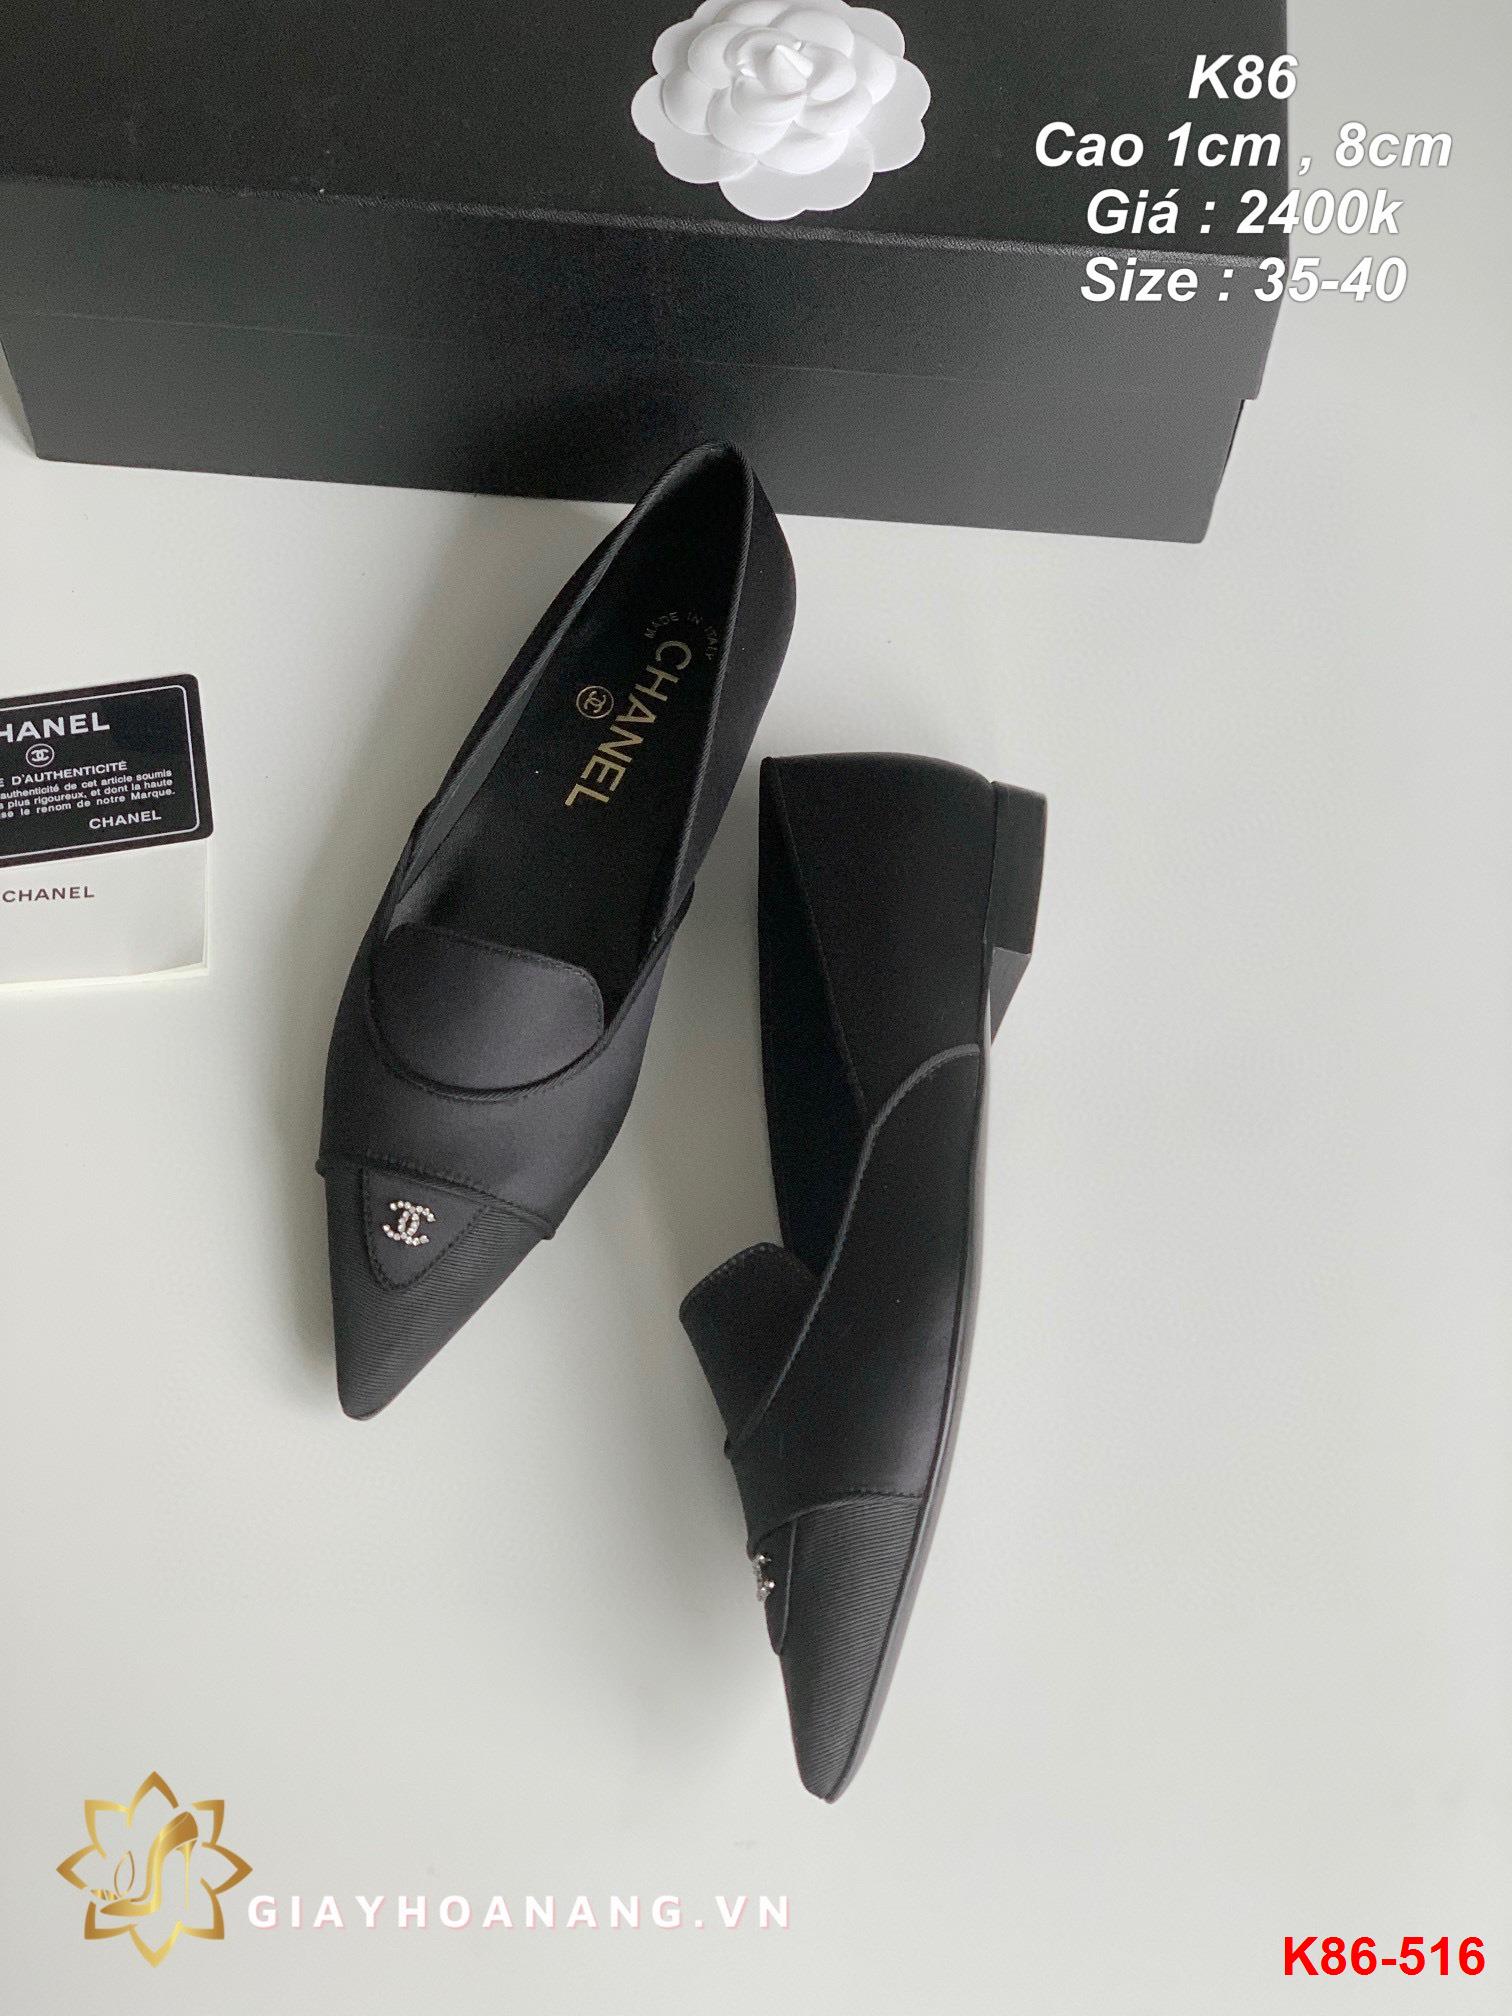 K86-516 Chanel giày cao 1cm , 8cm siêu cấp